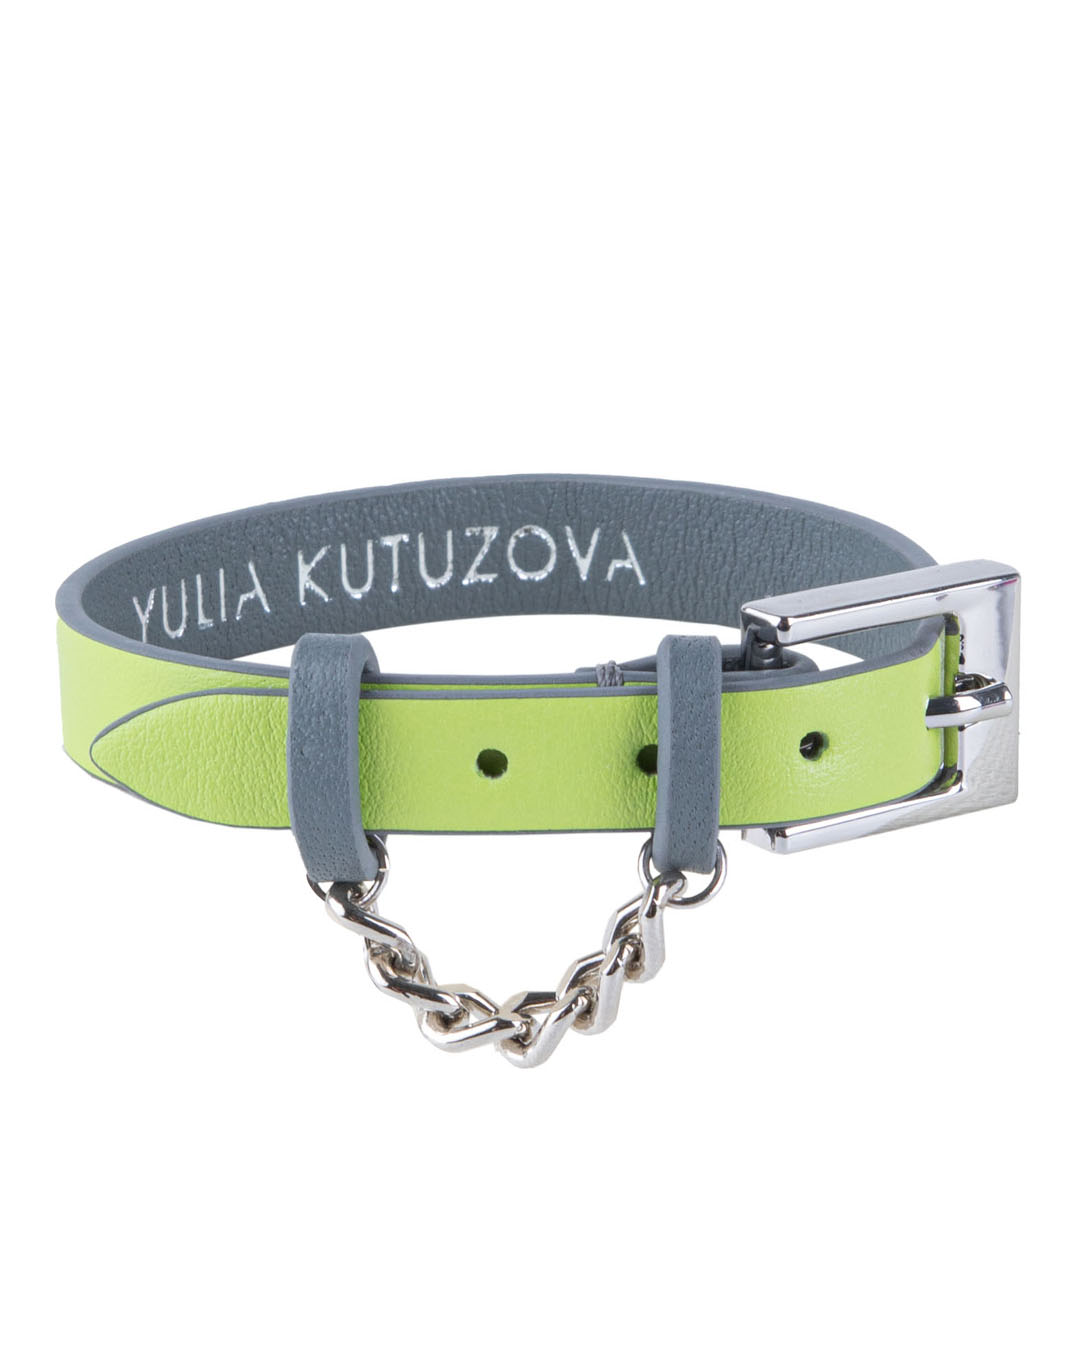 YULIA KUTUZOVA CHAIN артикул  марки YULIA KUTUZOVA купить за 2900 руб.